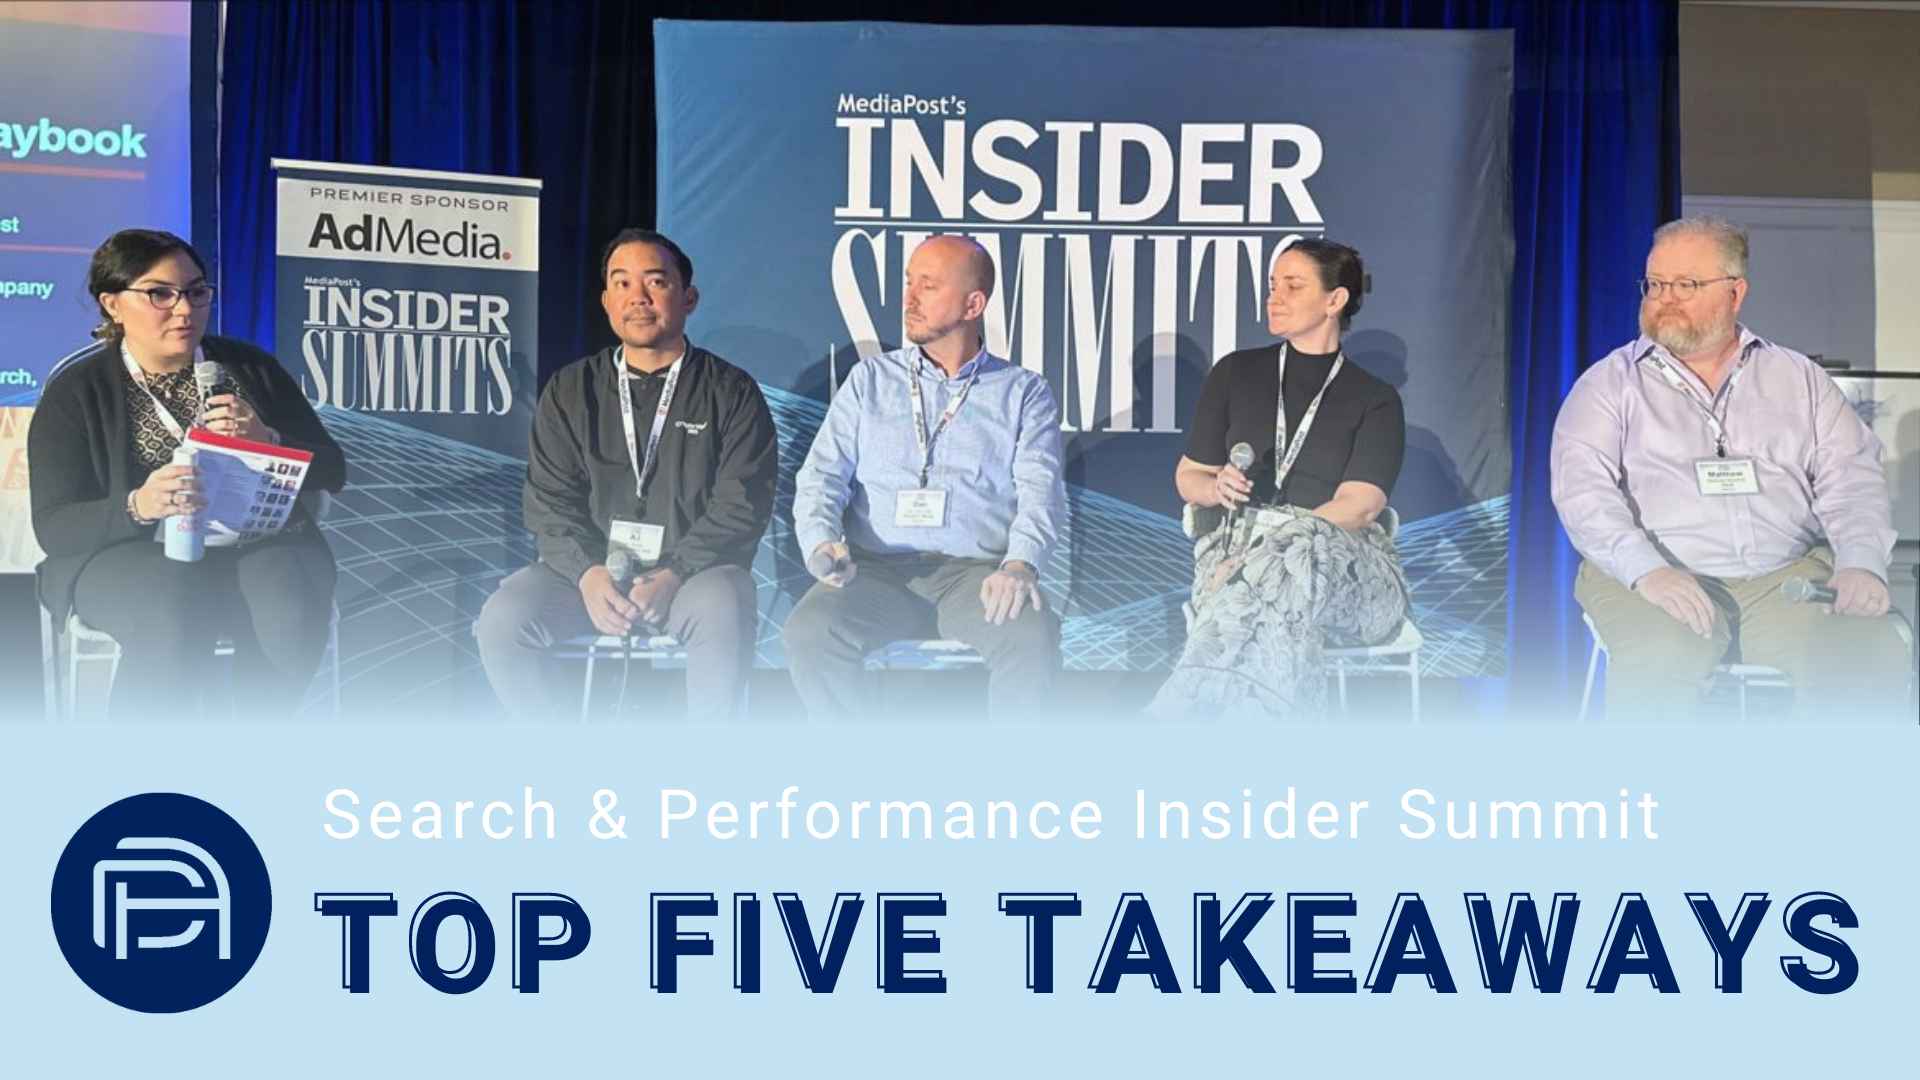 Search & Performance Insider Summit: Top 5 Takeaways